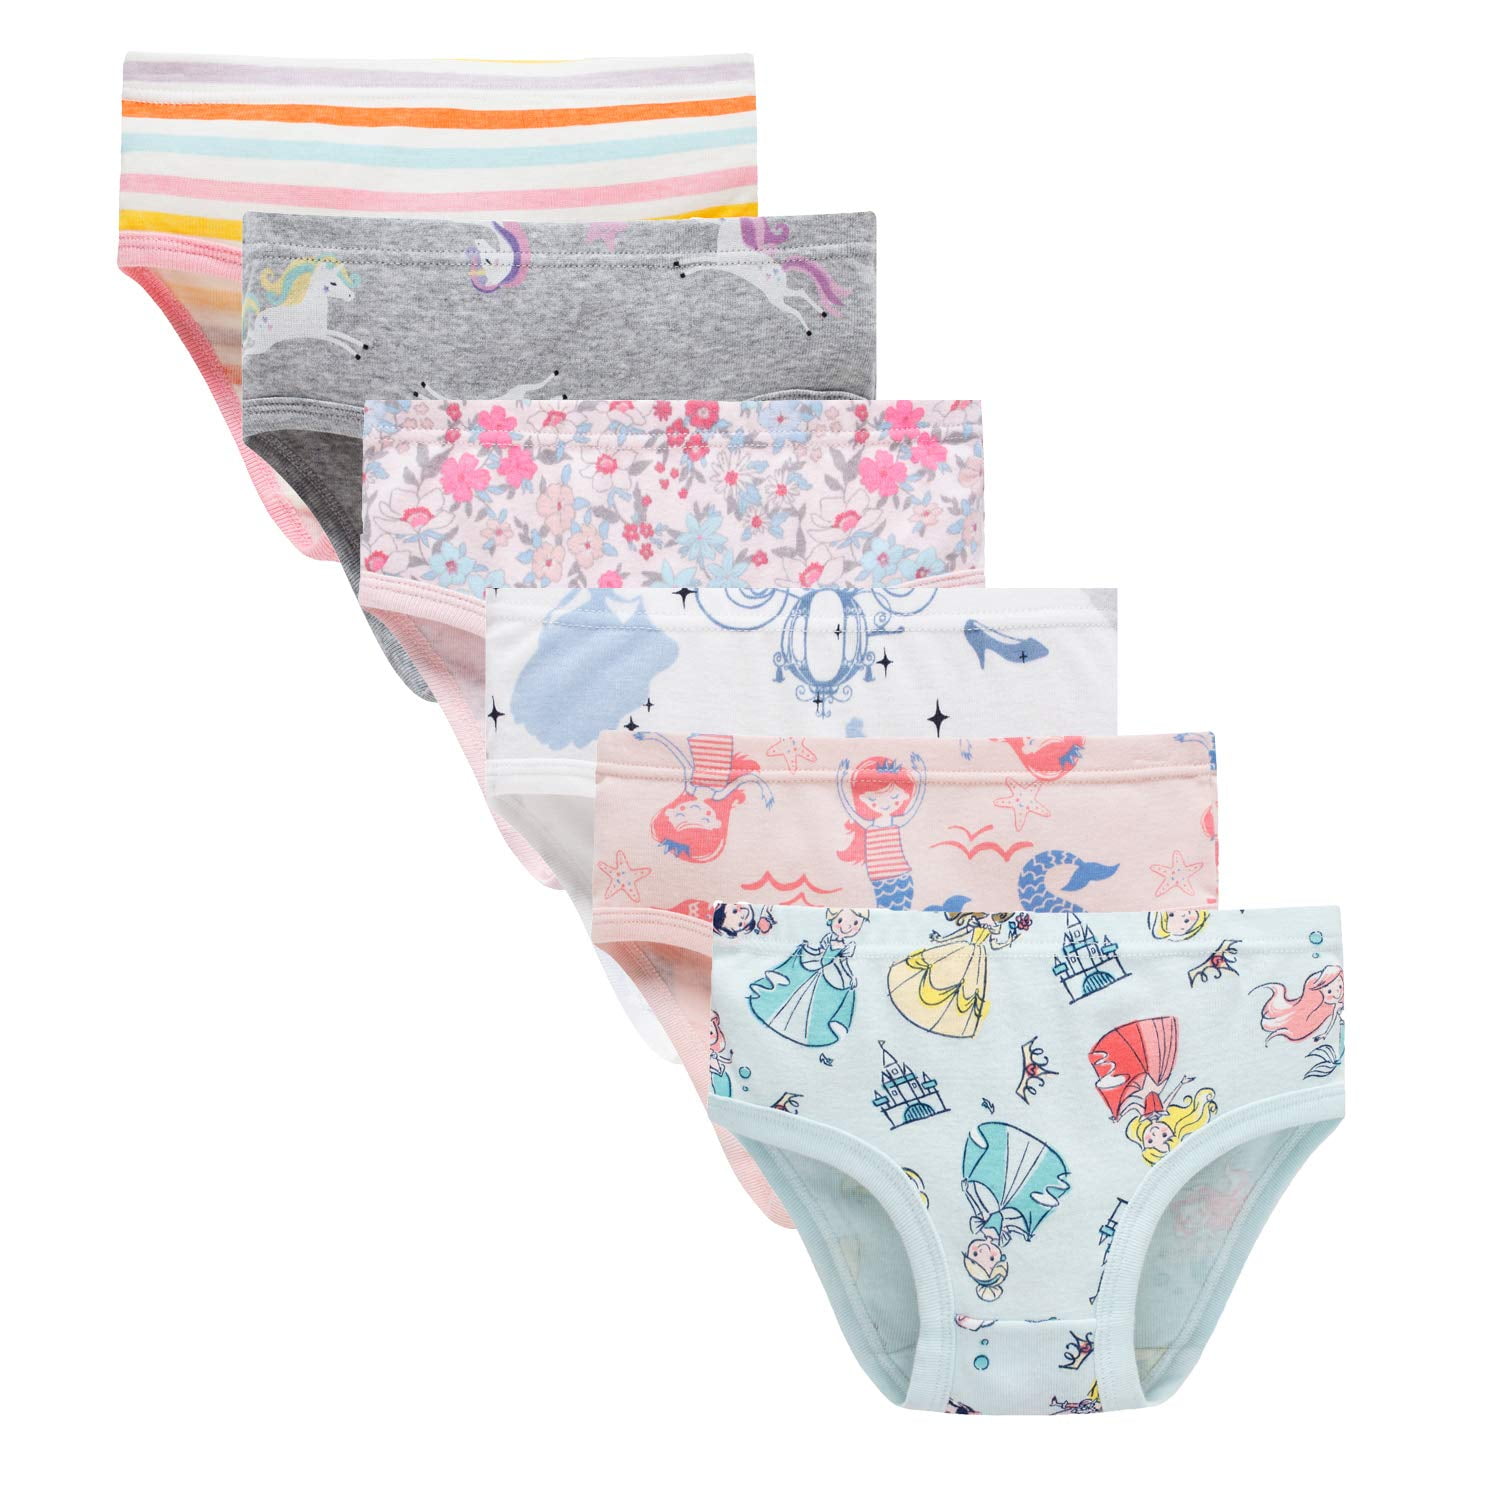 Hahan Baby Soft Cotton Panties Little Girls'Briefs Toddler Unicorn